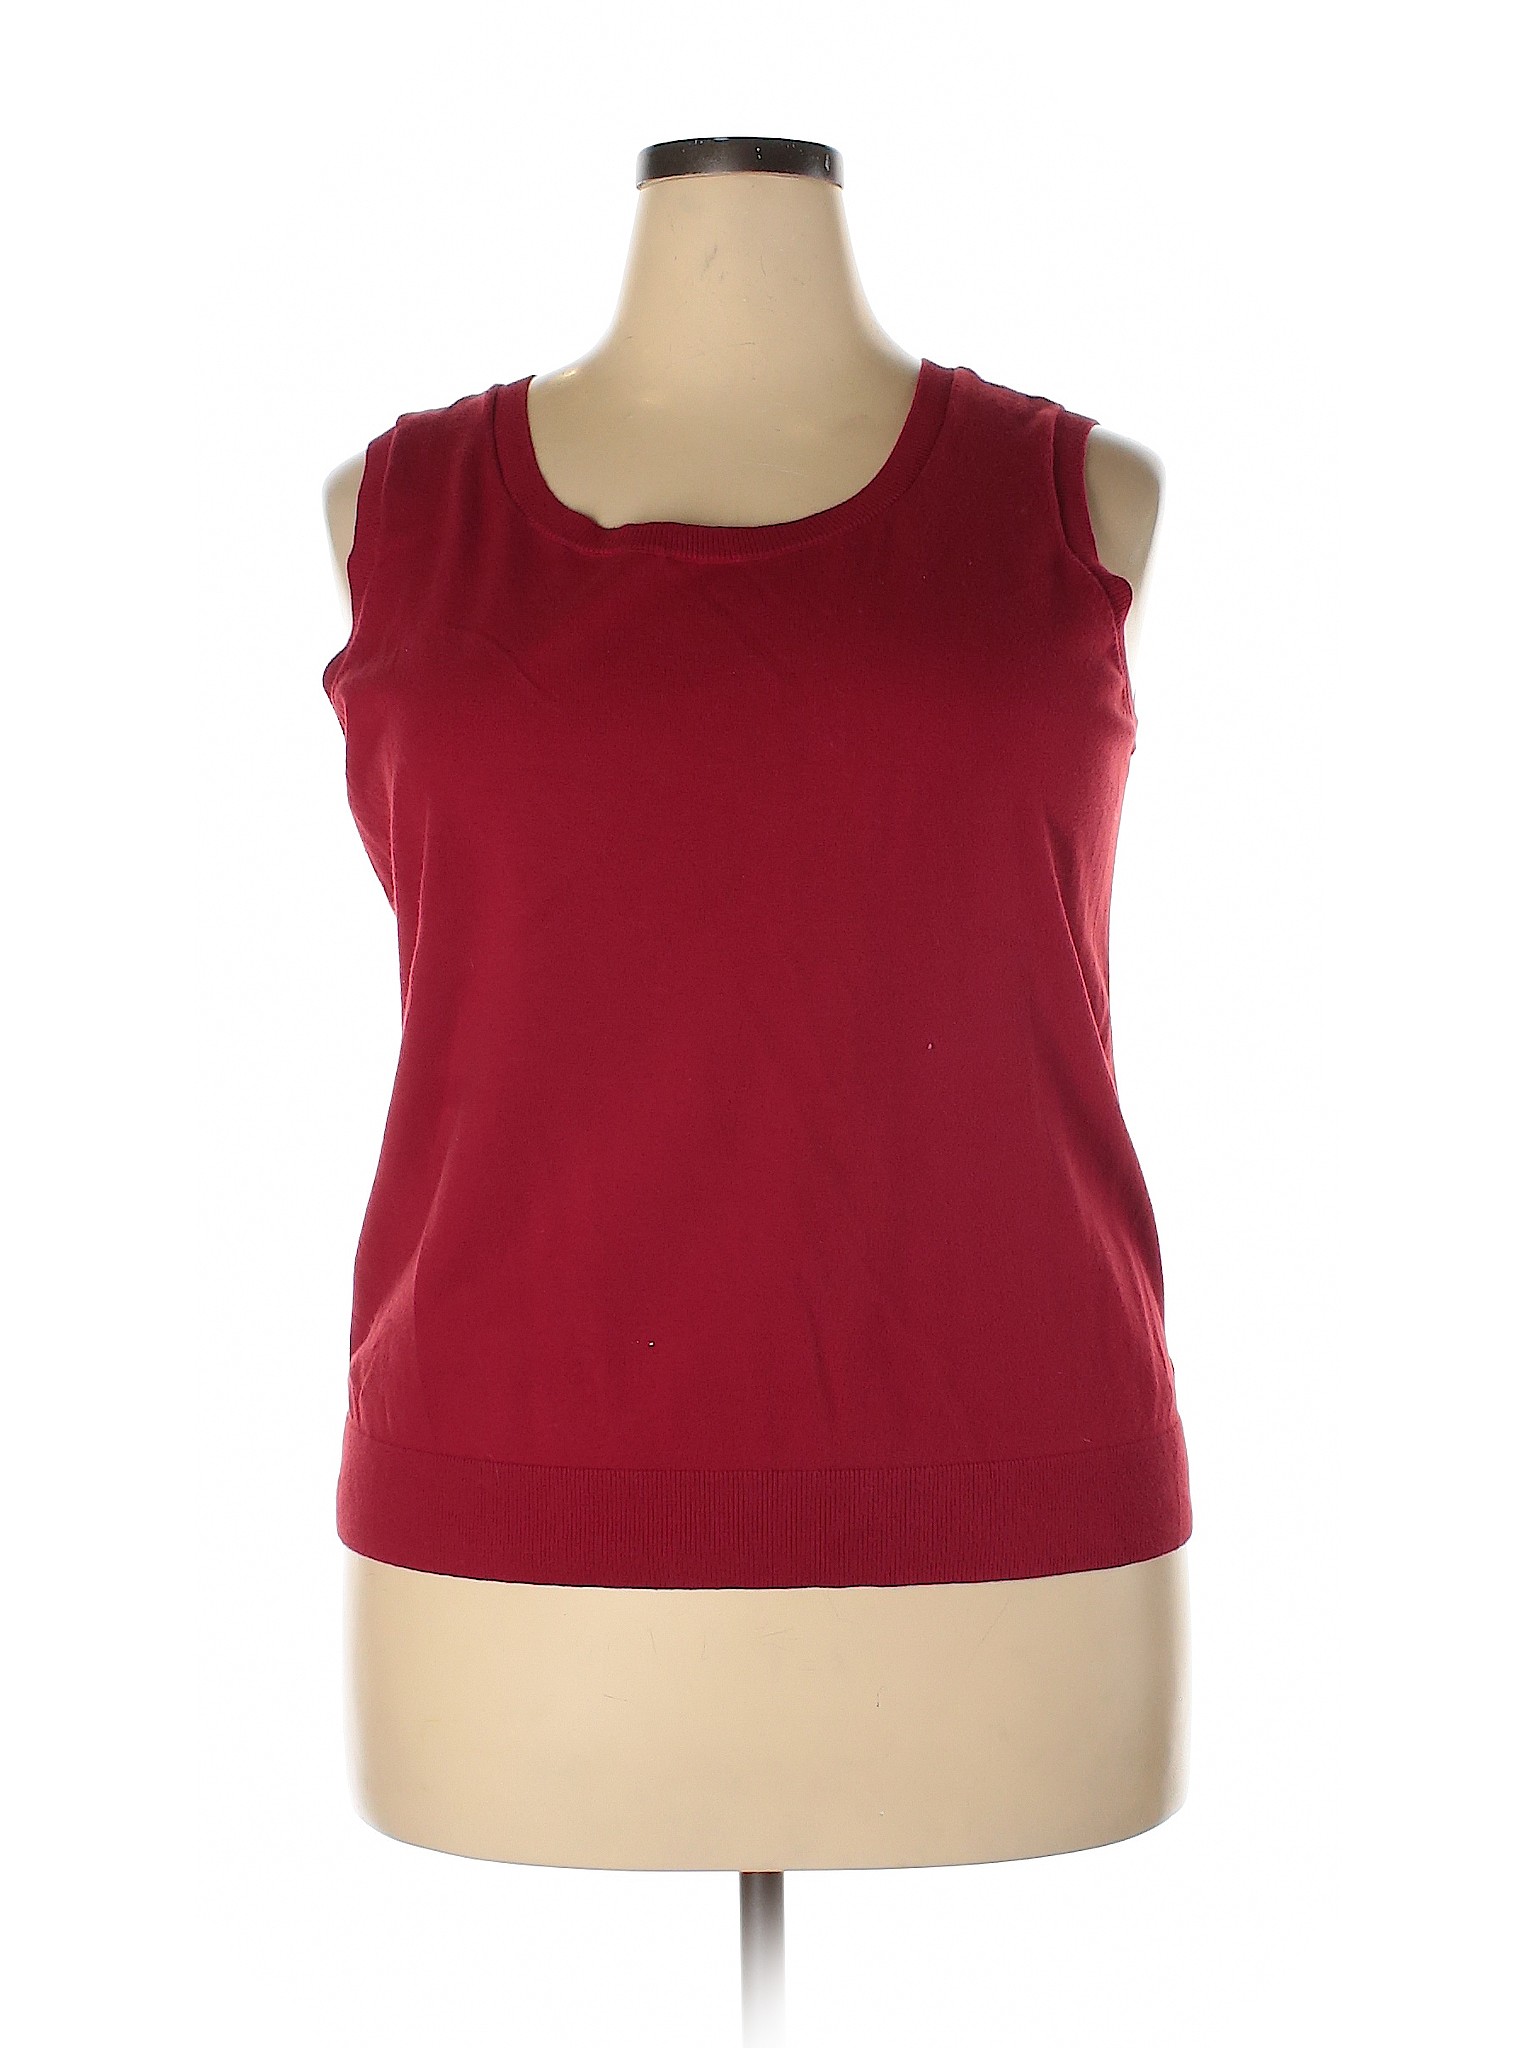 Talbots Women Red Sweater Vest 2X Plus | eBay